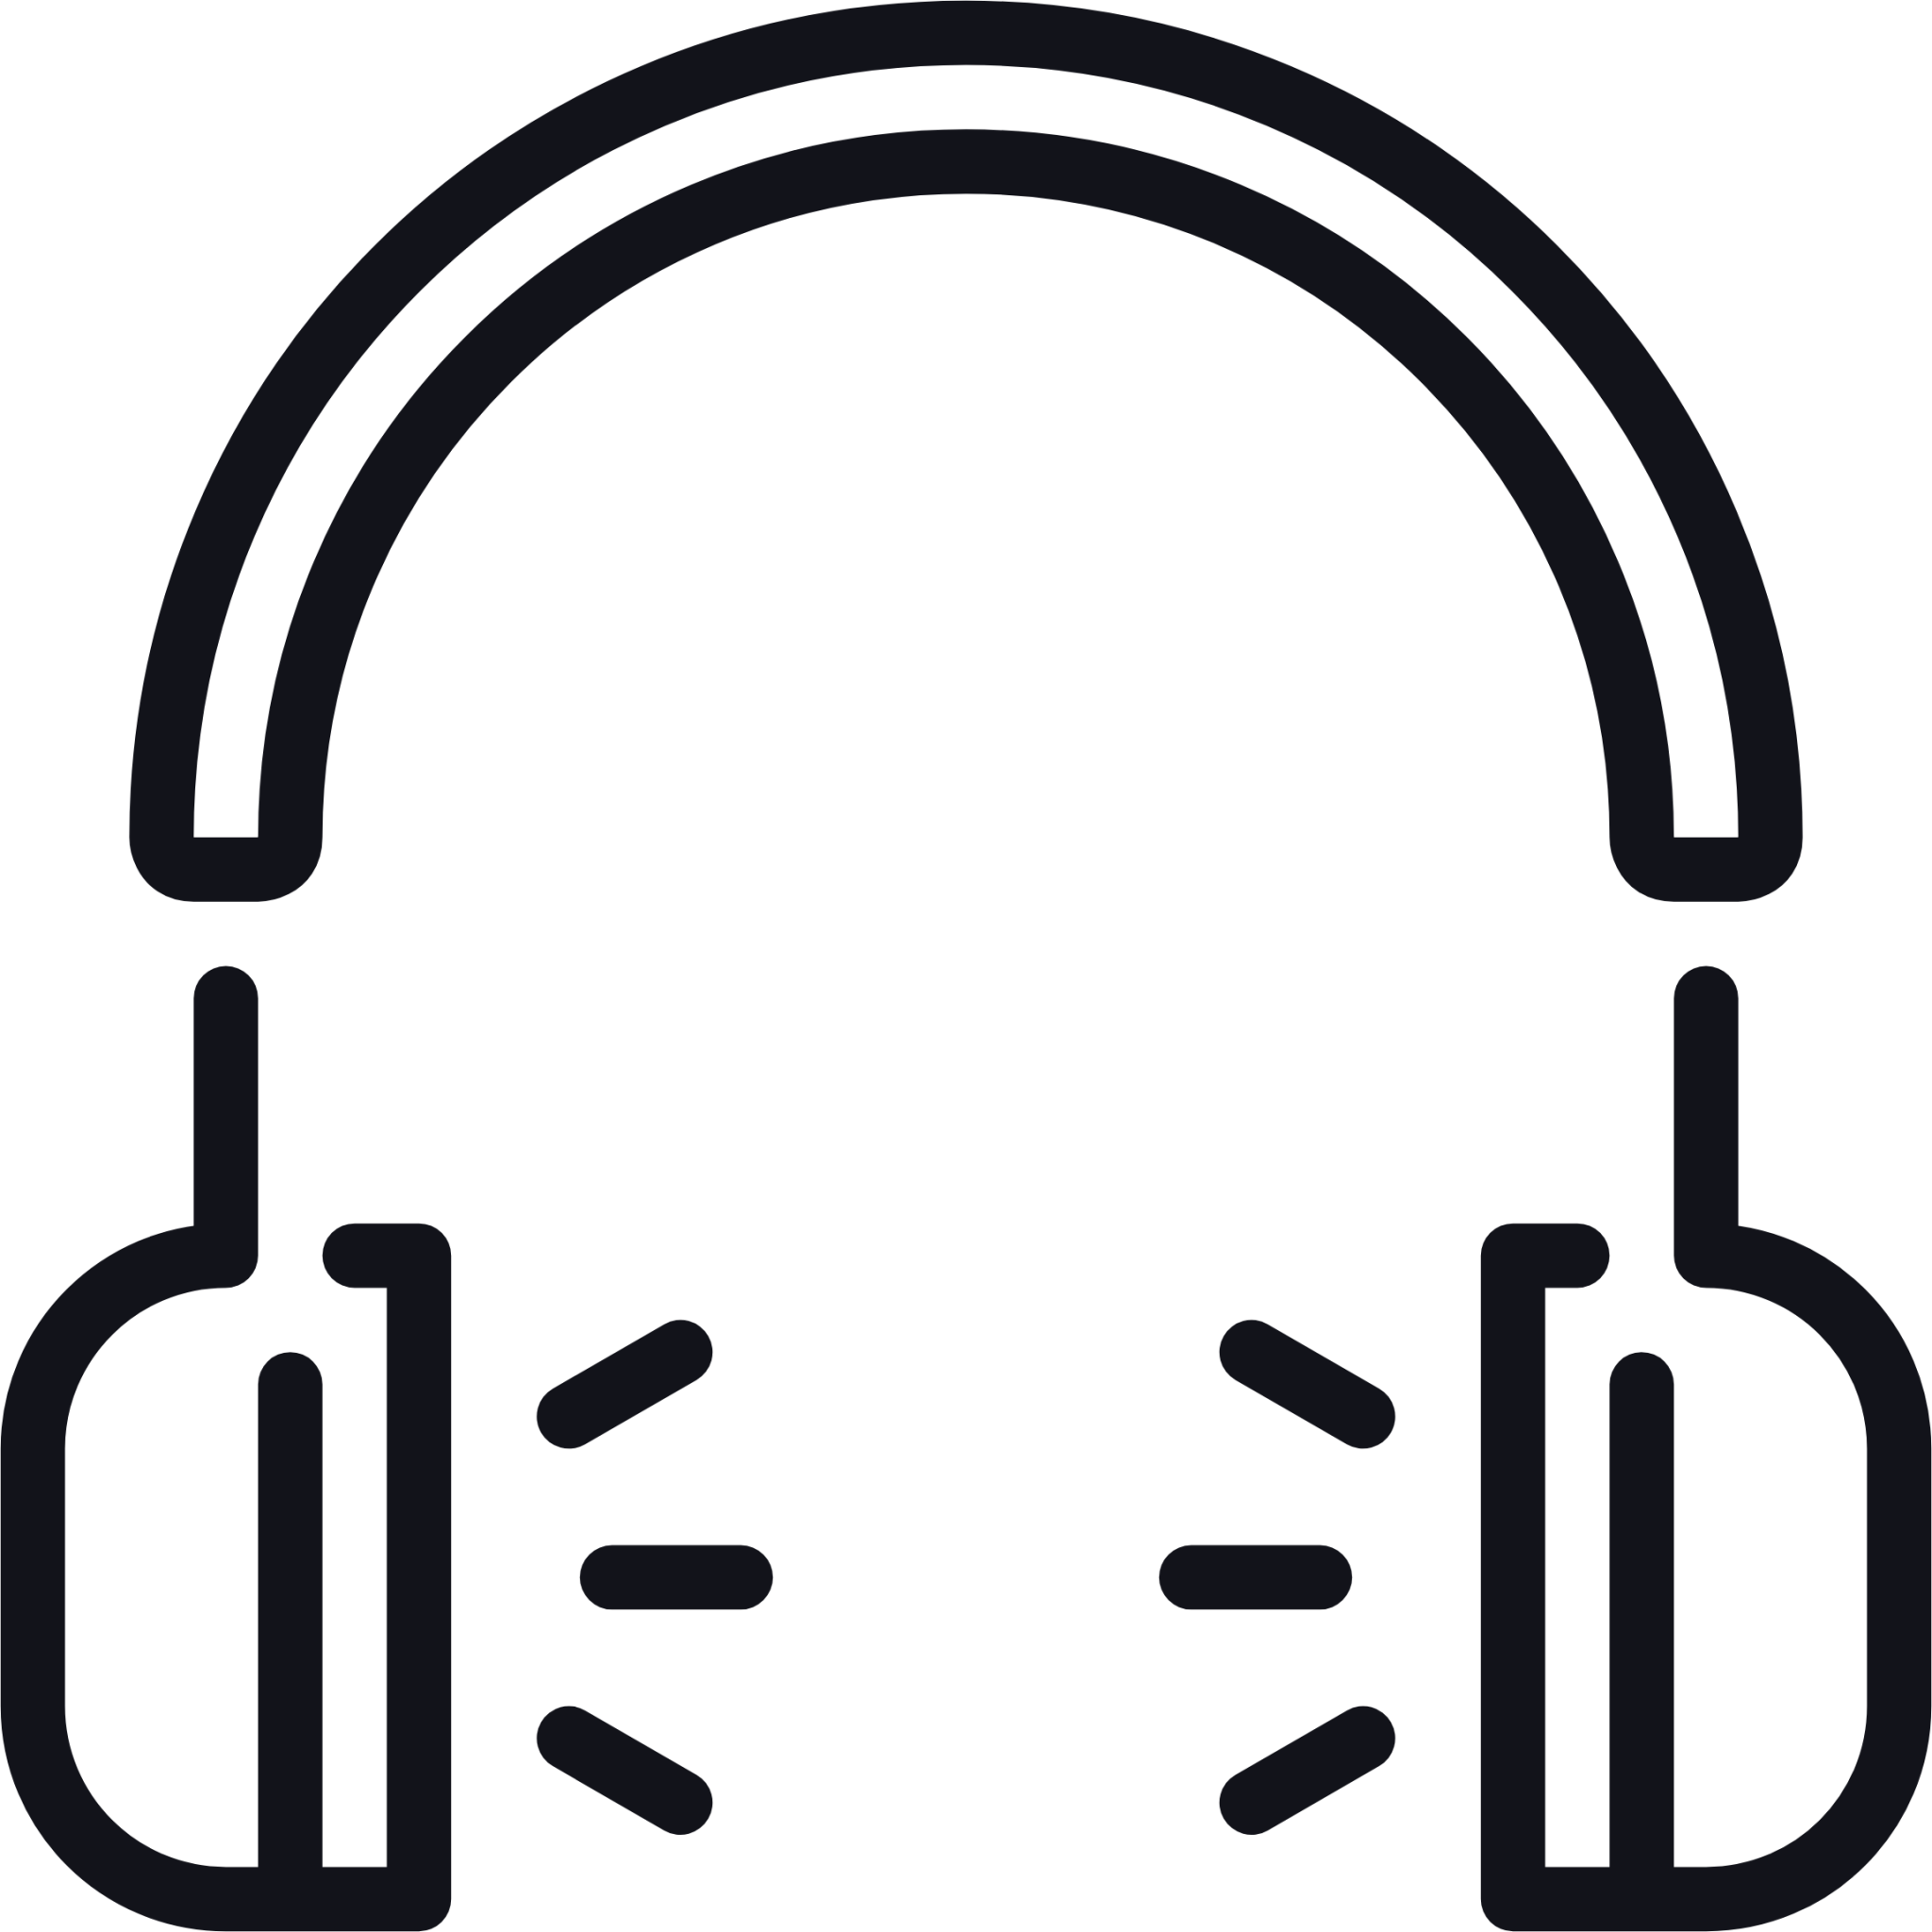 headphones symbol computer